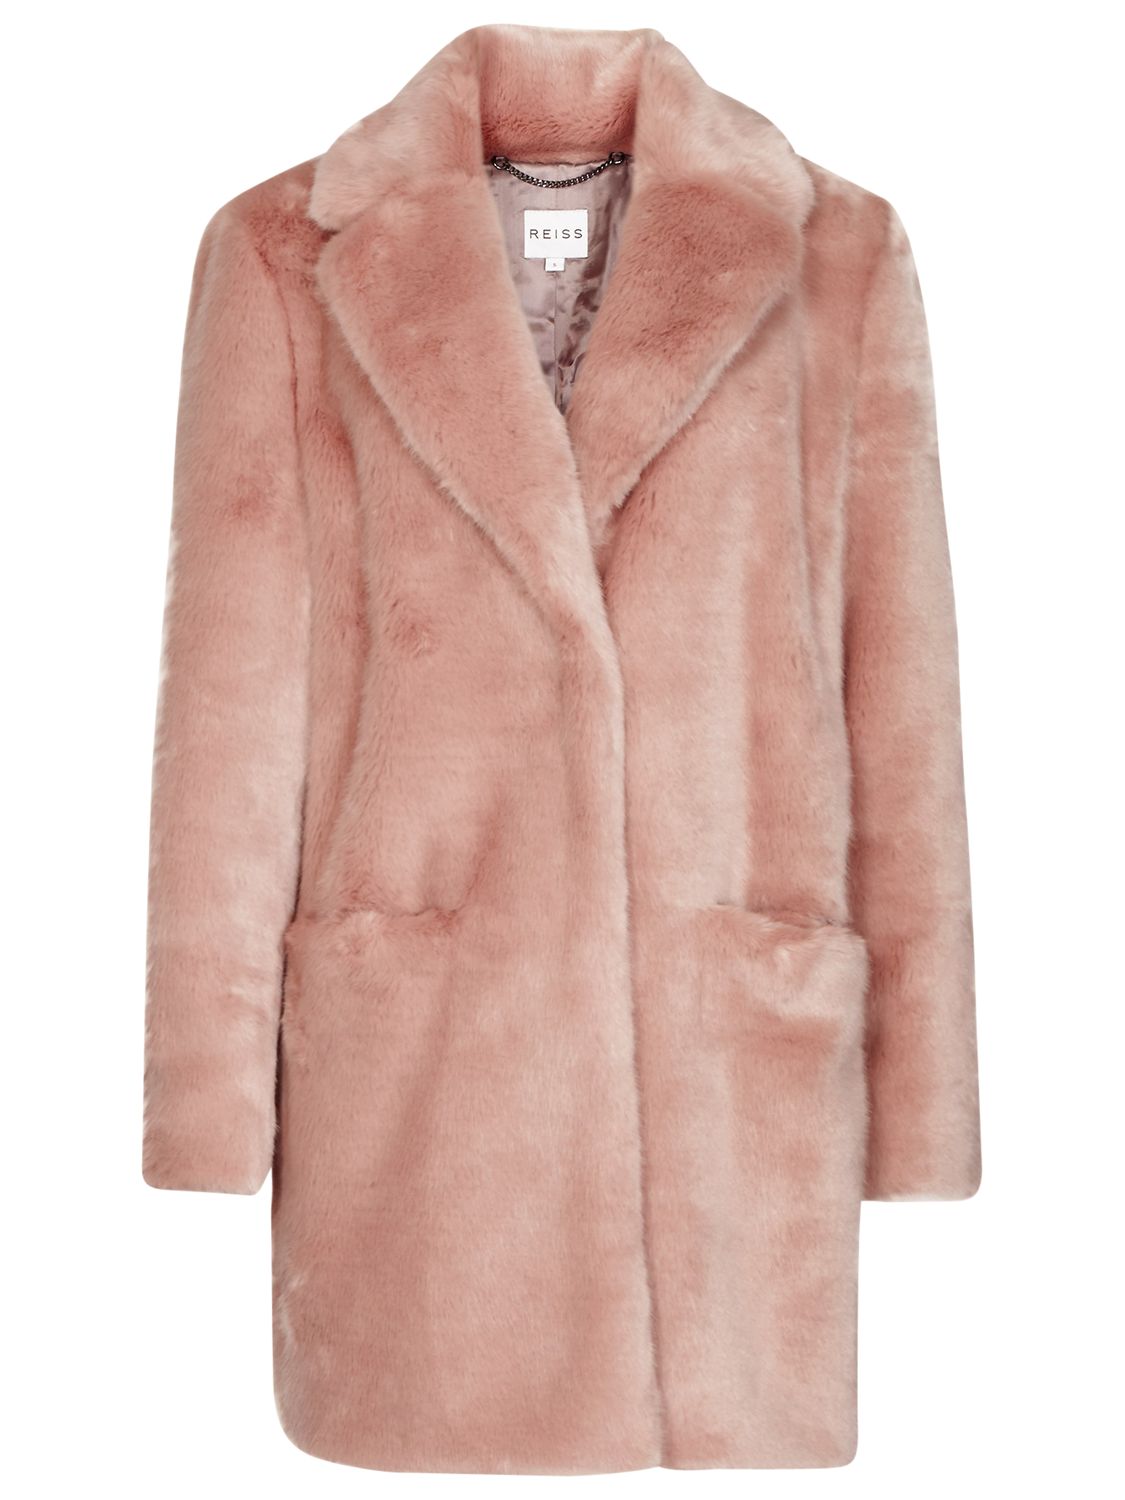 Reiss Alba Faux Fur Coat, Warm Pink at John Lewis & Partners